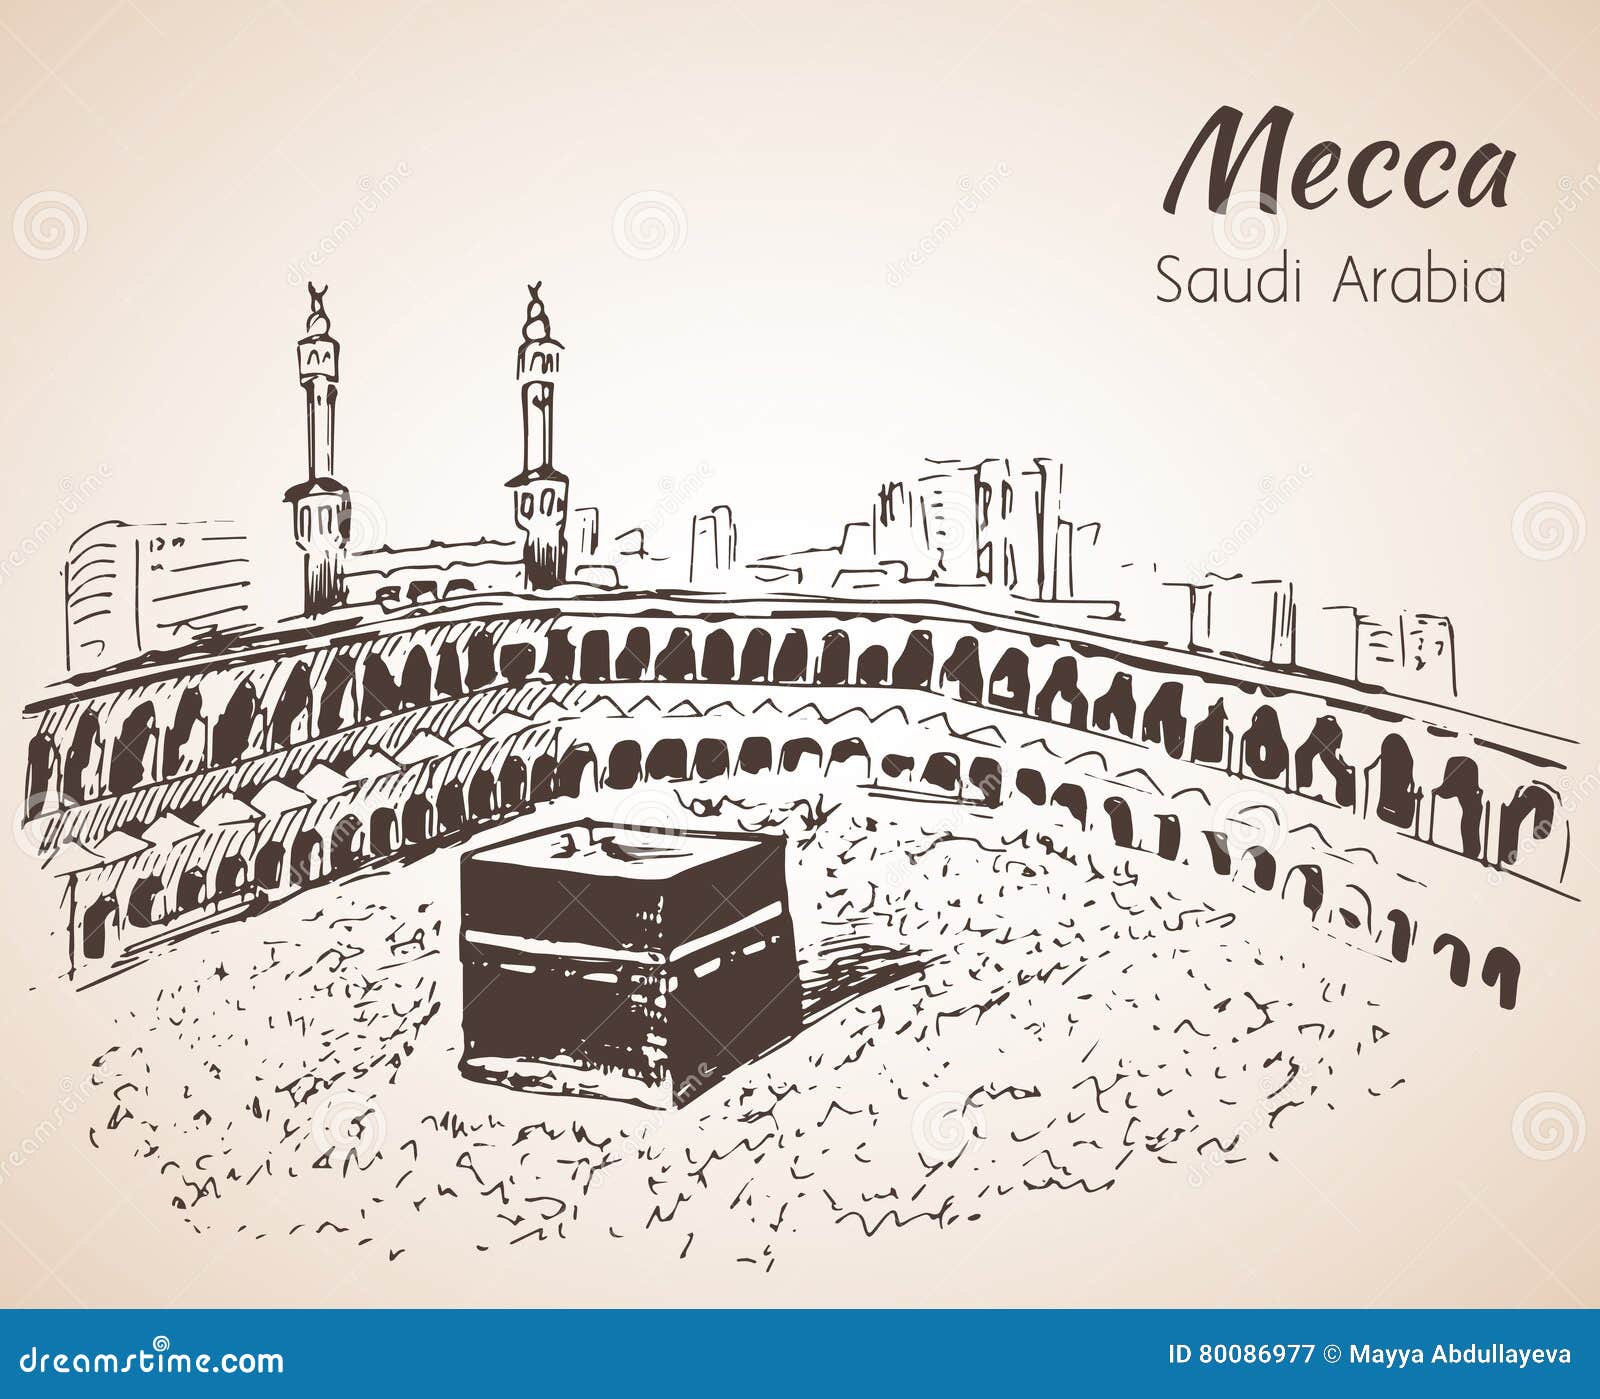 masjid al-haram sketch. mecca.